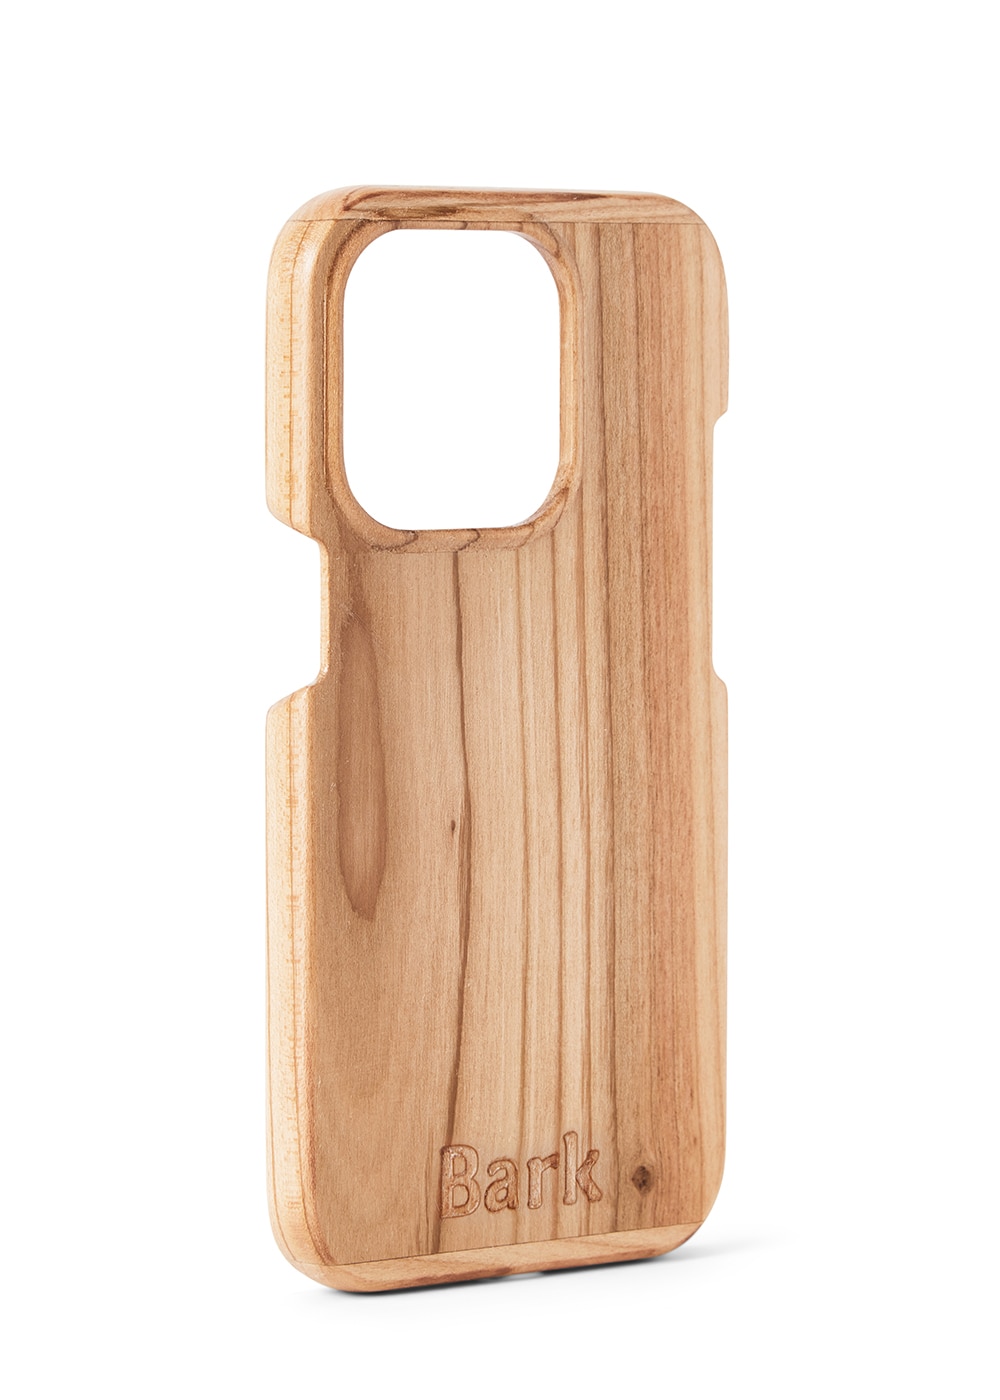 iPhone 14 Pro case made of Swedish hardwood - Körsbär